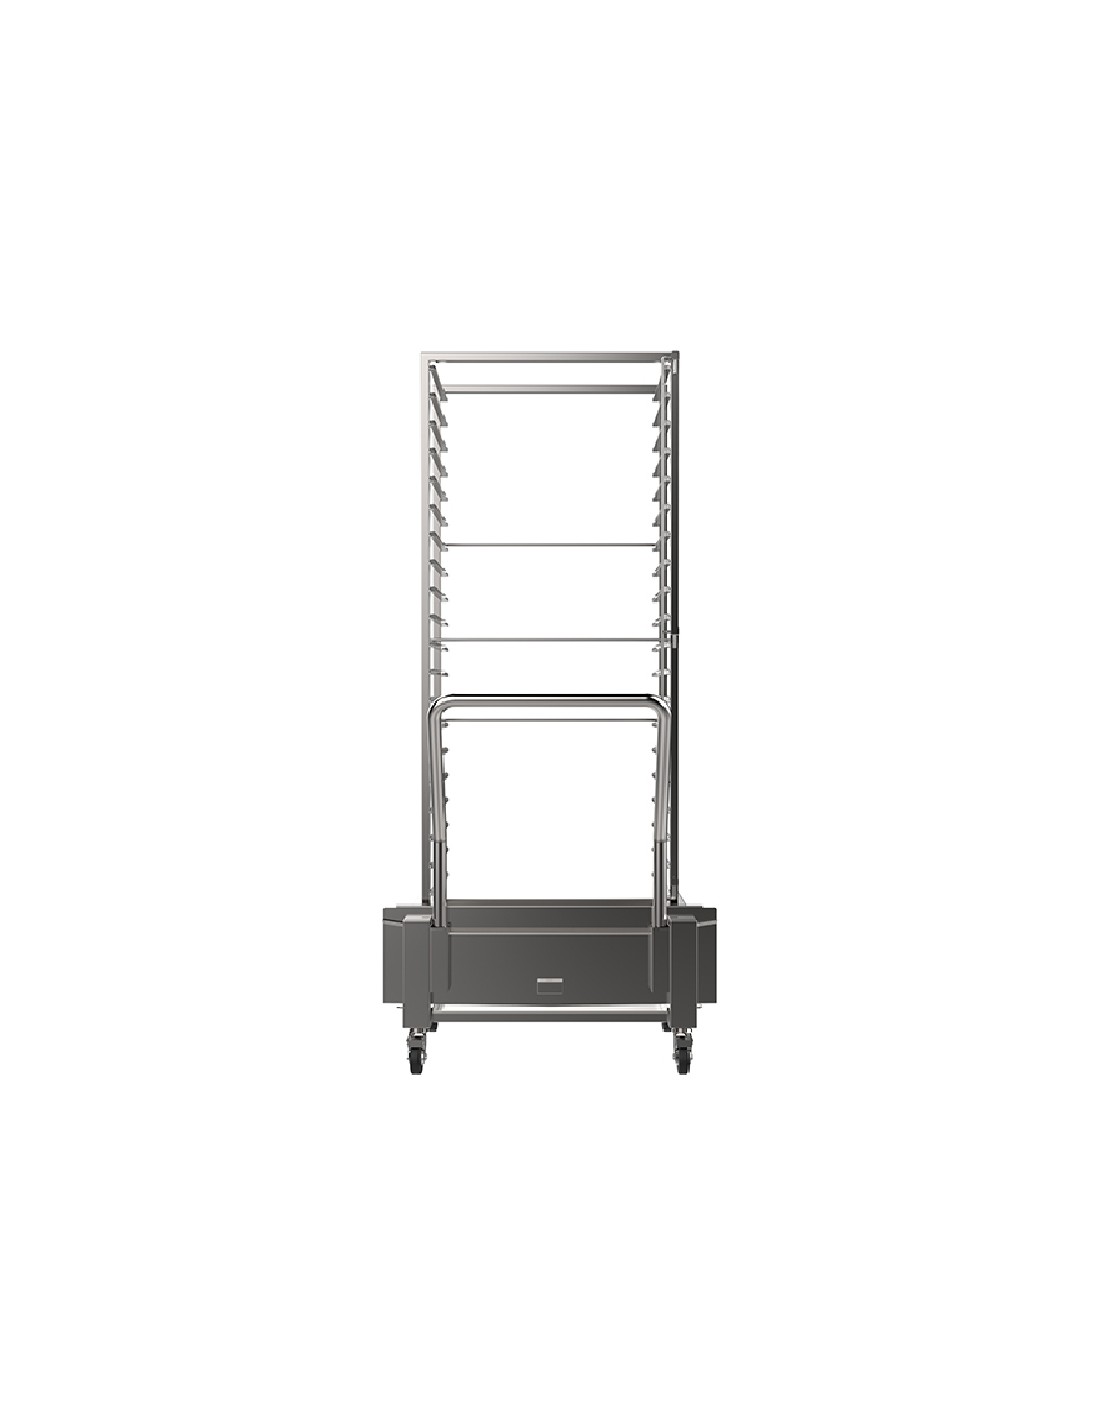 Retractable trolley - Acciaio inox AISI 304 - Ergonomic handle - Braking wheels - For ovens 20 pans - Dimensions cm 66 x